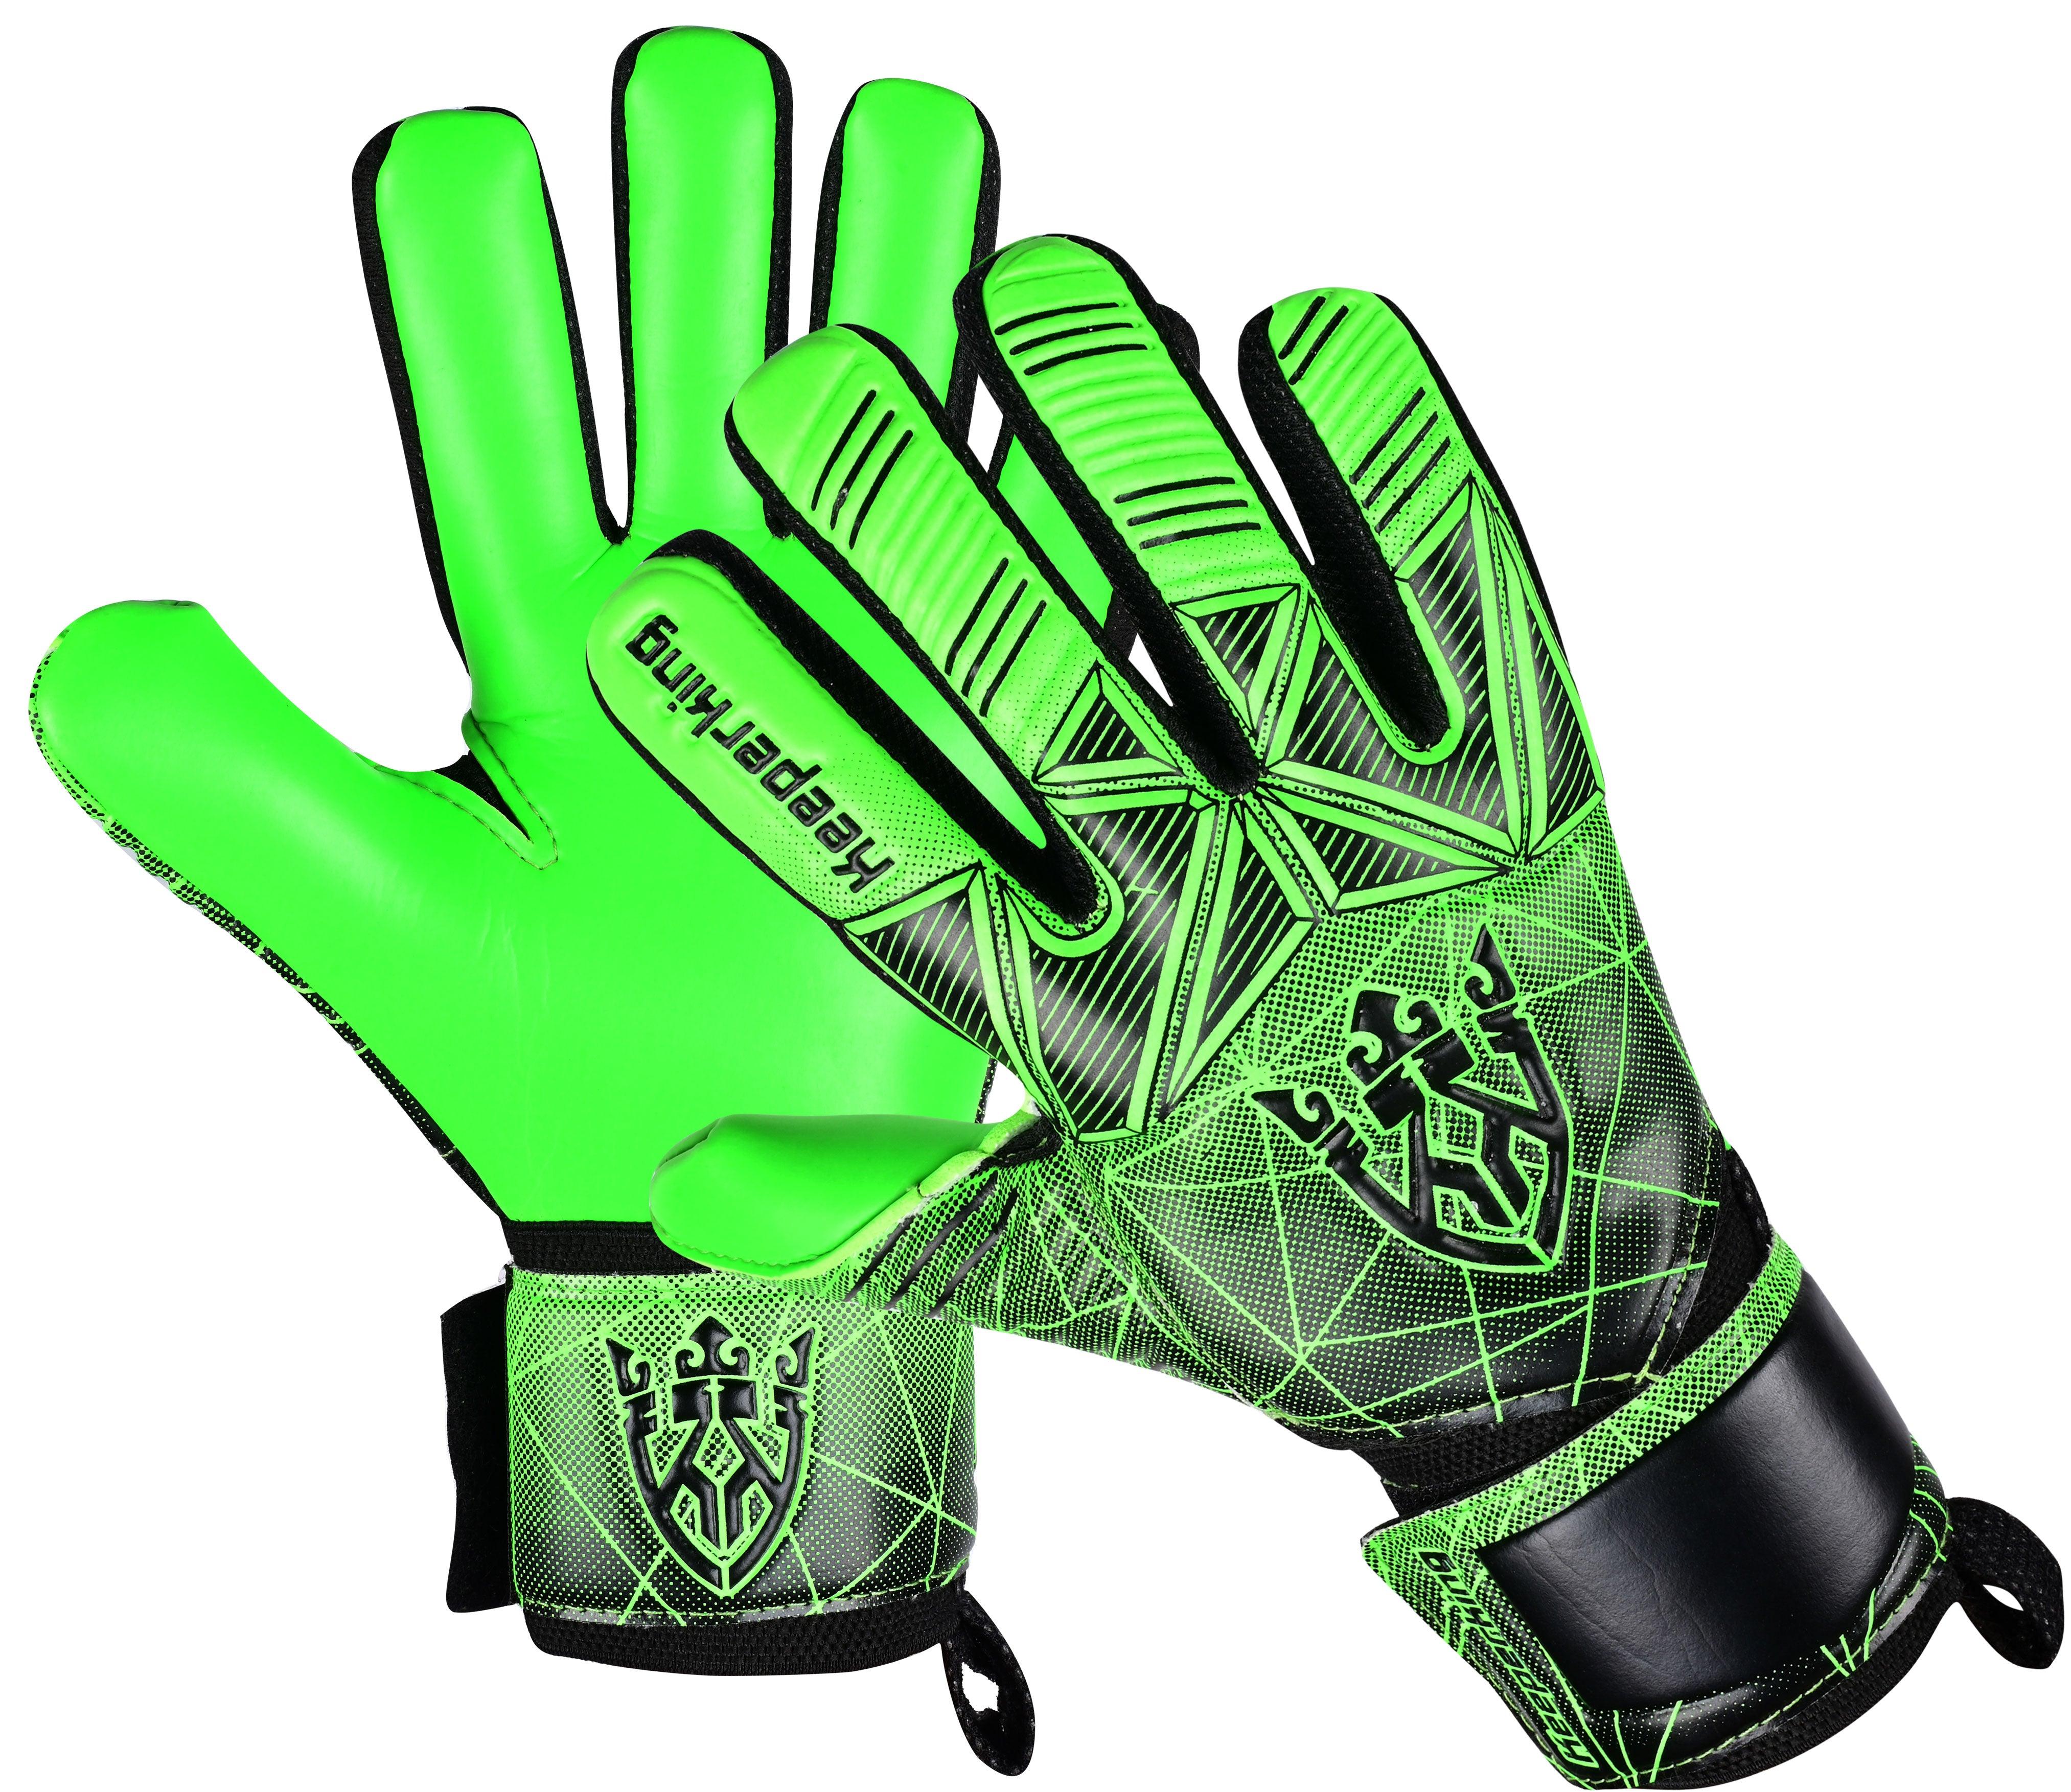 ALPHA GREEN WITH FINGERSAVE goalkeeper gloves